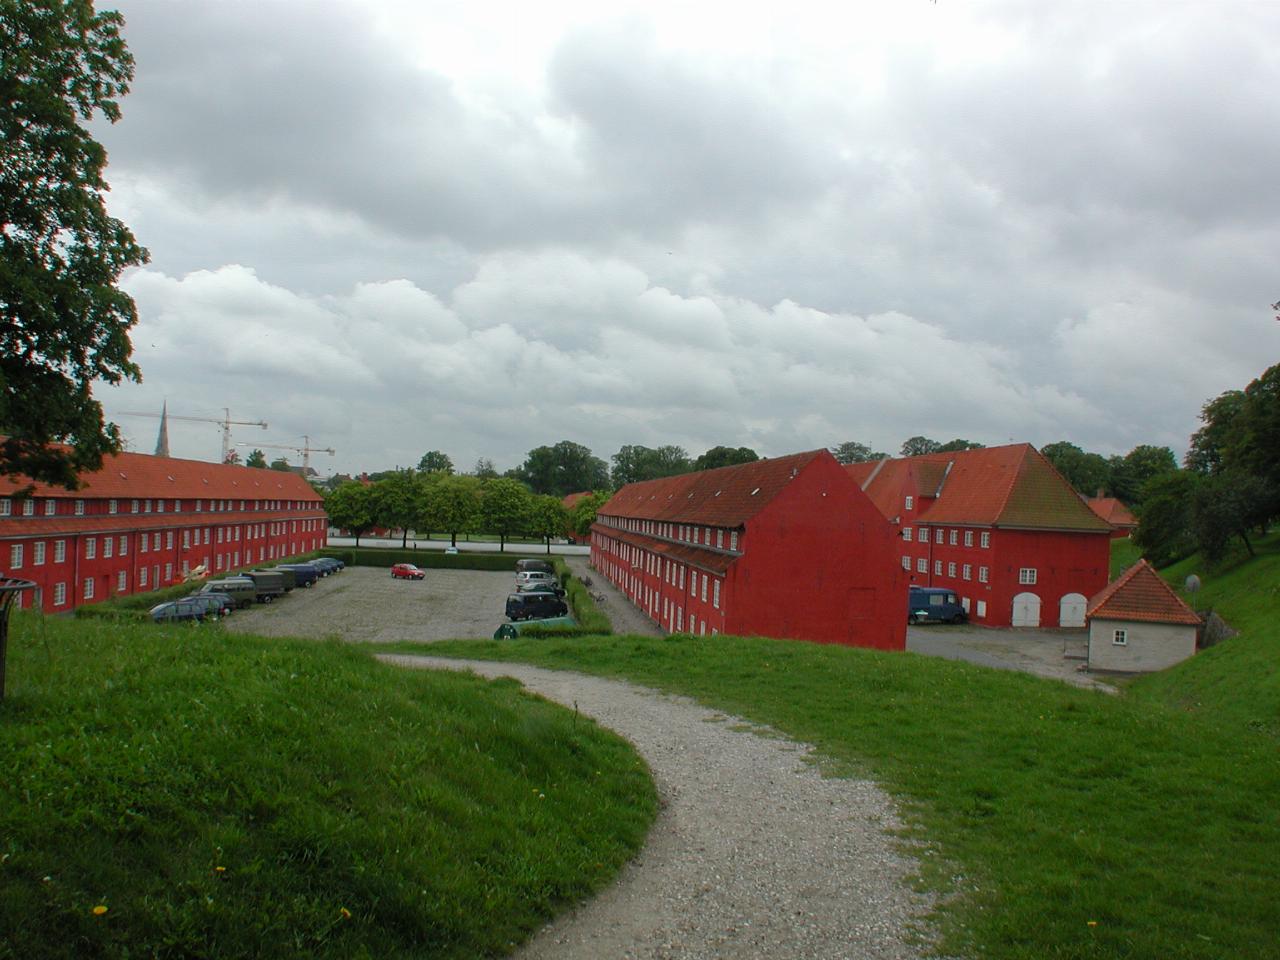 KPLU Viking Jazz: Barracks inside the Kastellet